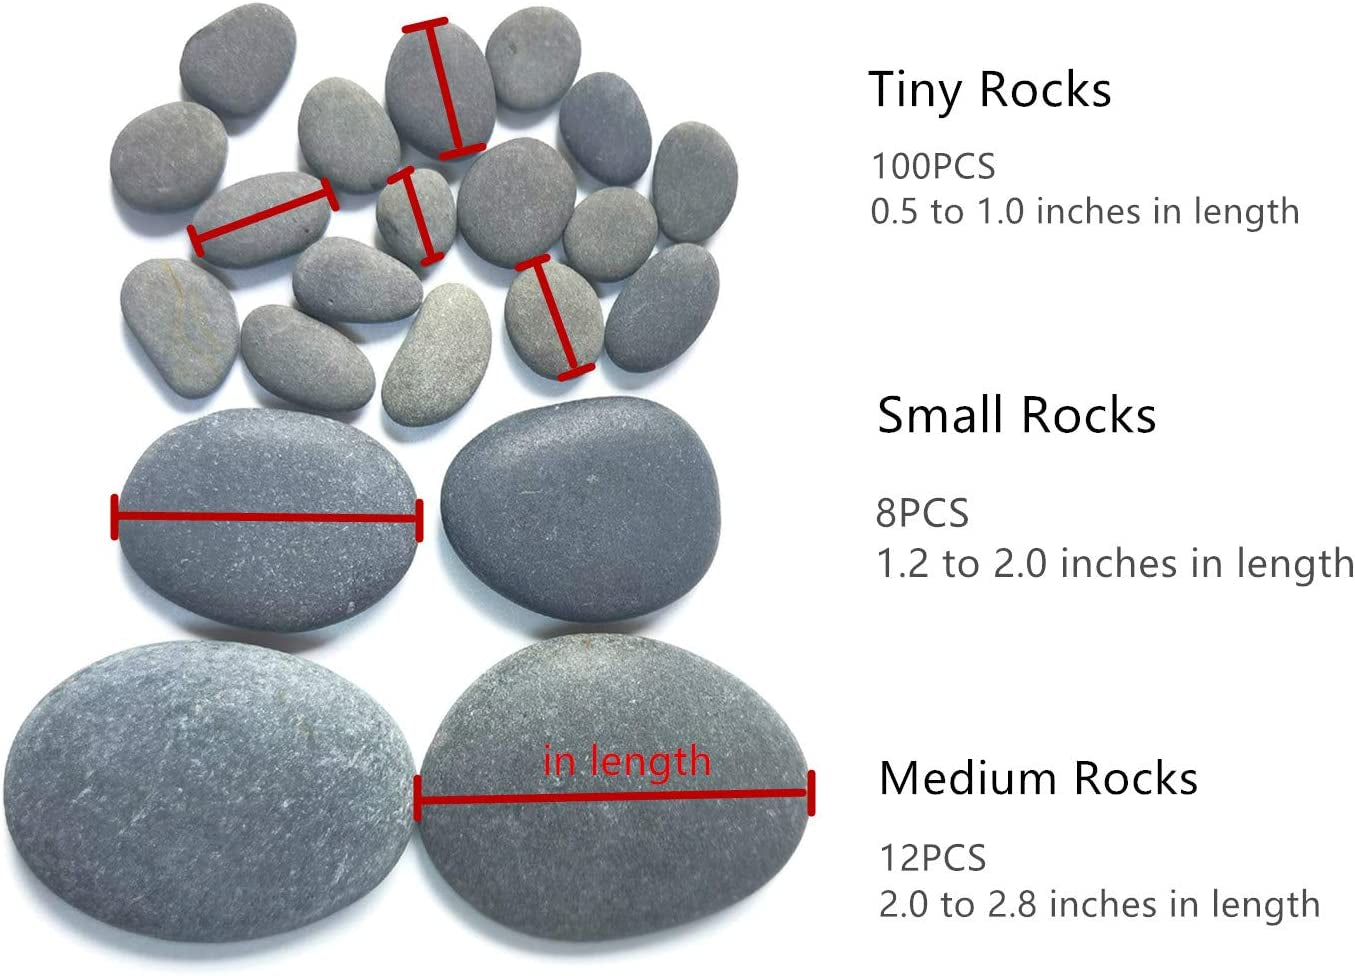 120PCS Painting Rocks, DIY Rocks Flat & Smooth Kindness Rocks for Arts, Crafts, Decoration, Medium/Small/Tiny Rocks for Painting,Hand Picked for Painting Rocks…